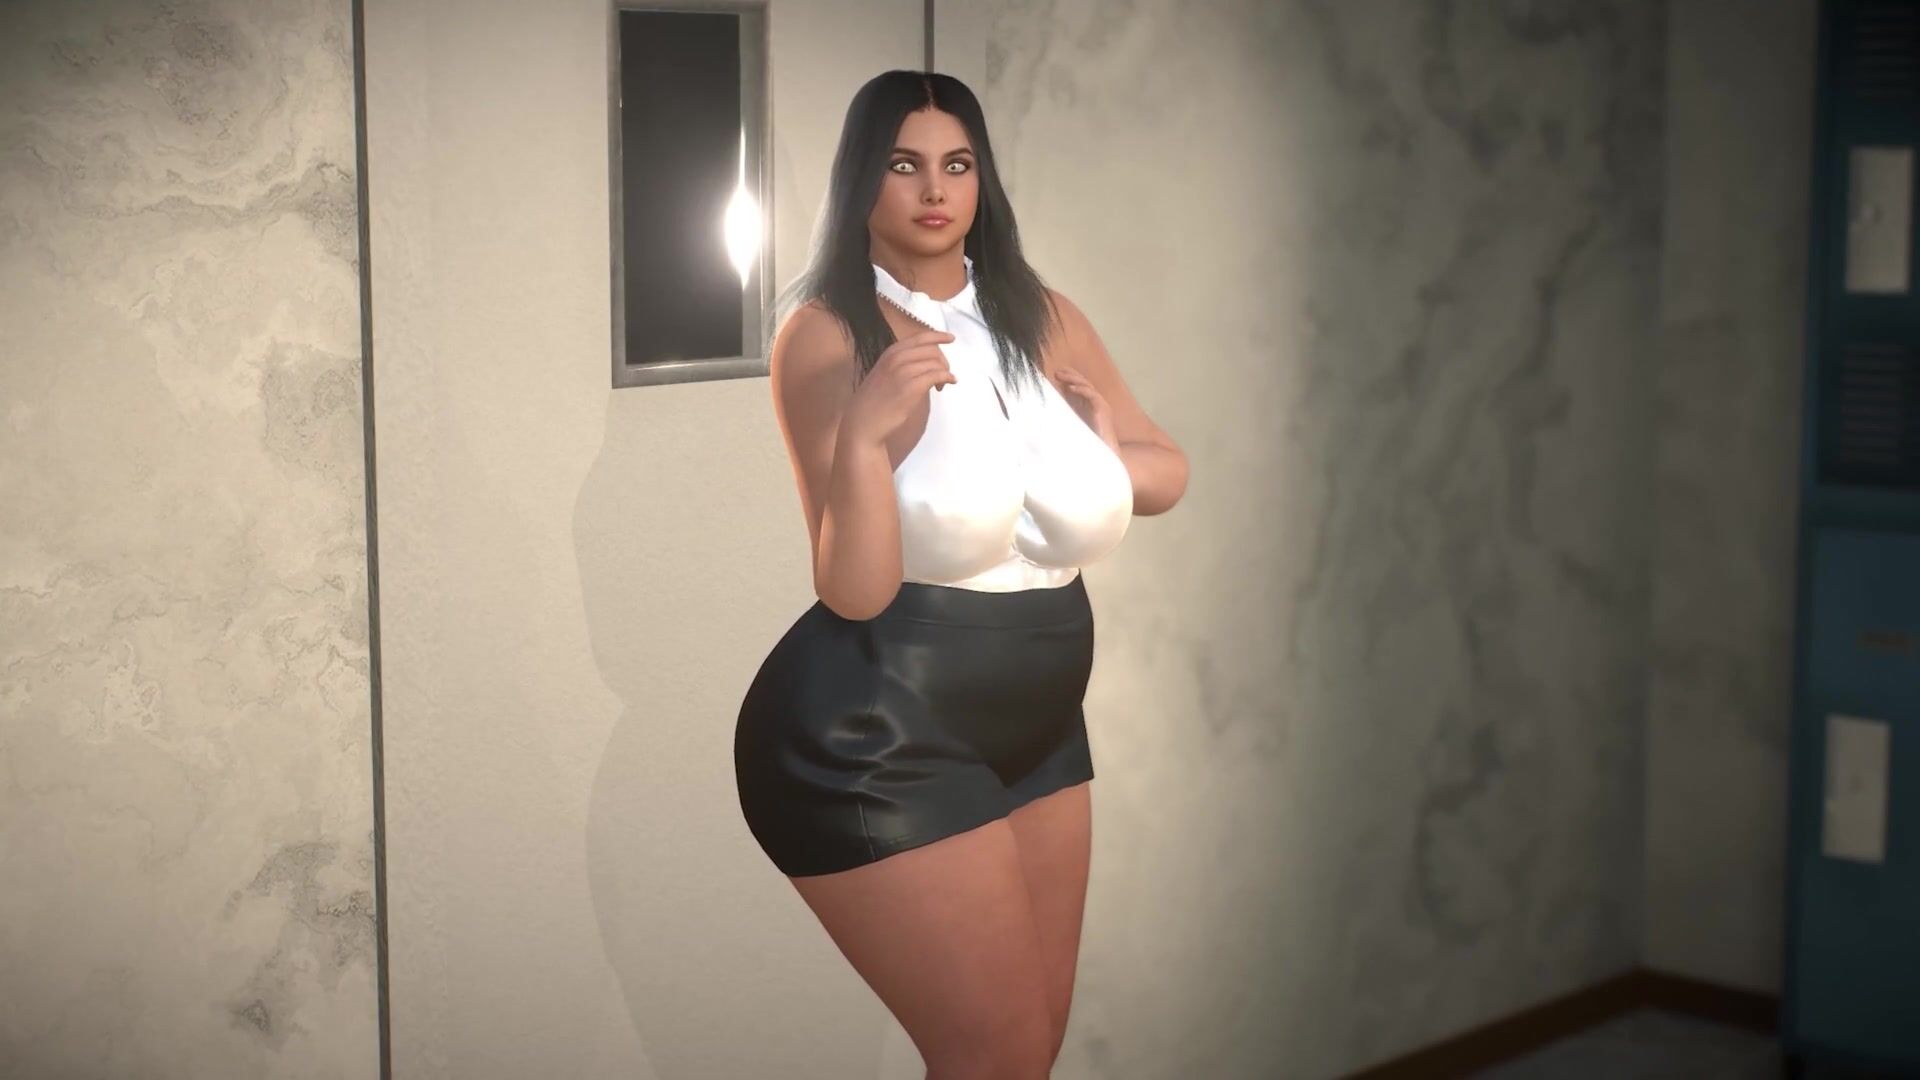 Sexy latina hourglass figure big boobs and ass